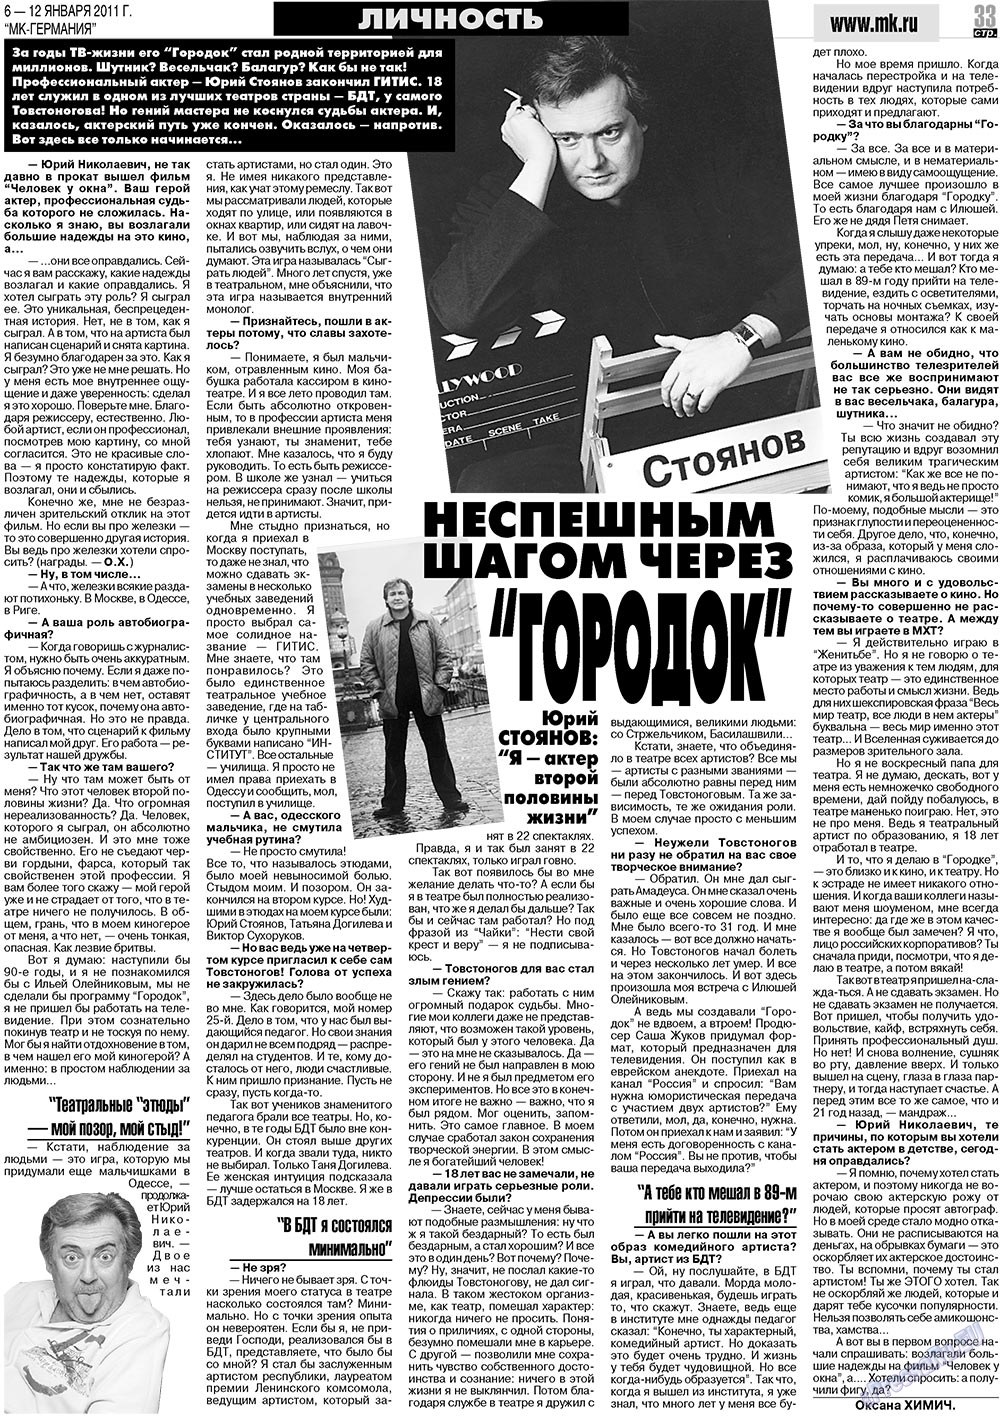 МК-Германия, газета. 2011 №1 стр.33